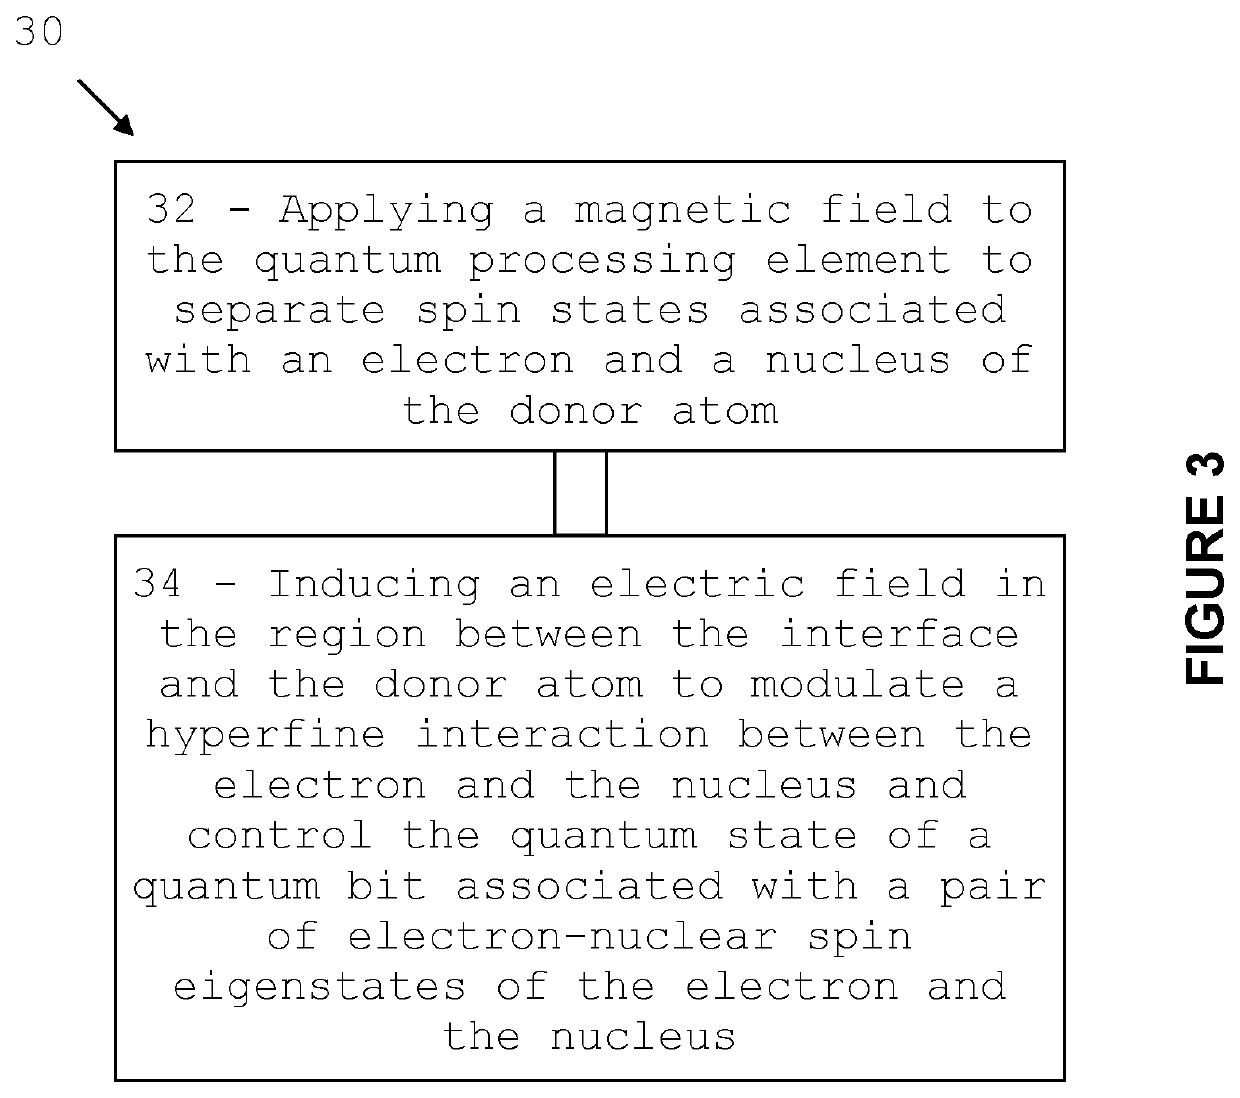 Quantum processing apparatus and a method of operating a quantum processing apparatus